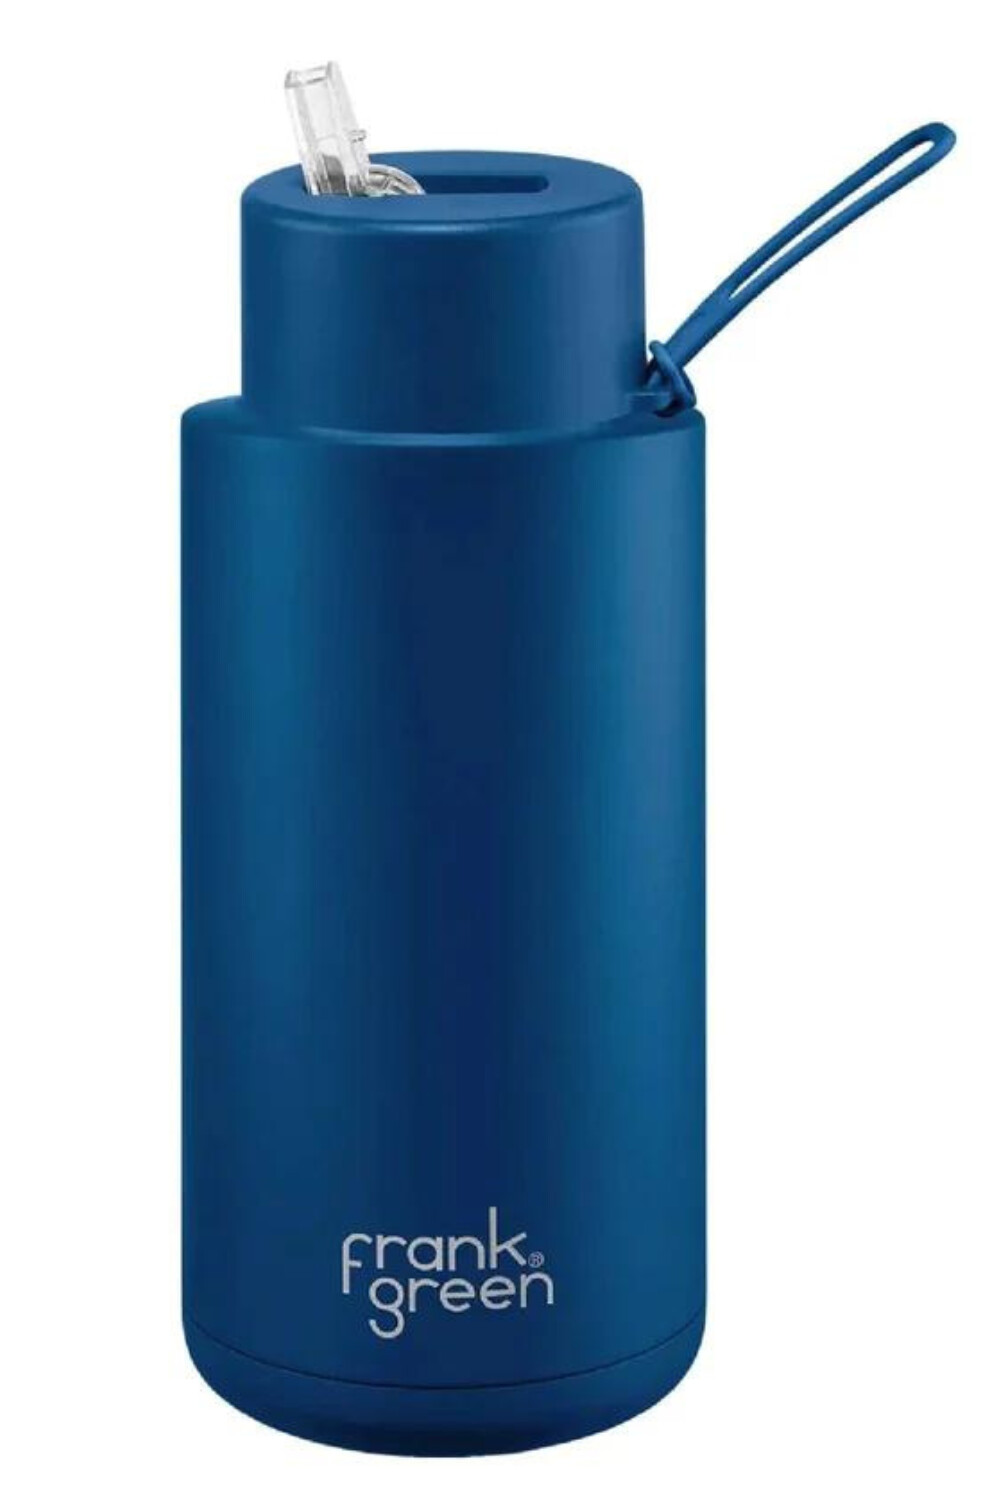 Frank Green Limited Edition Ceramic Reusable Bottle - 34oz / 1000mL - Navy